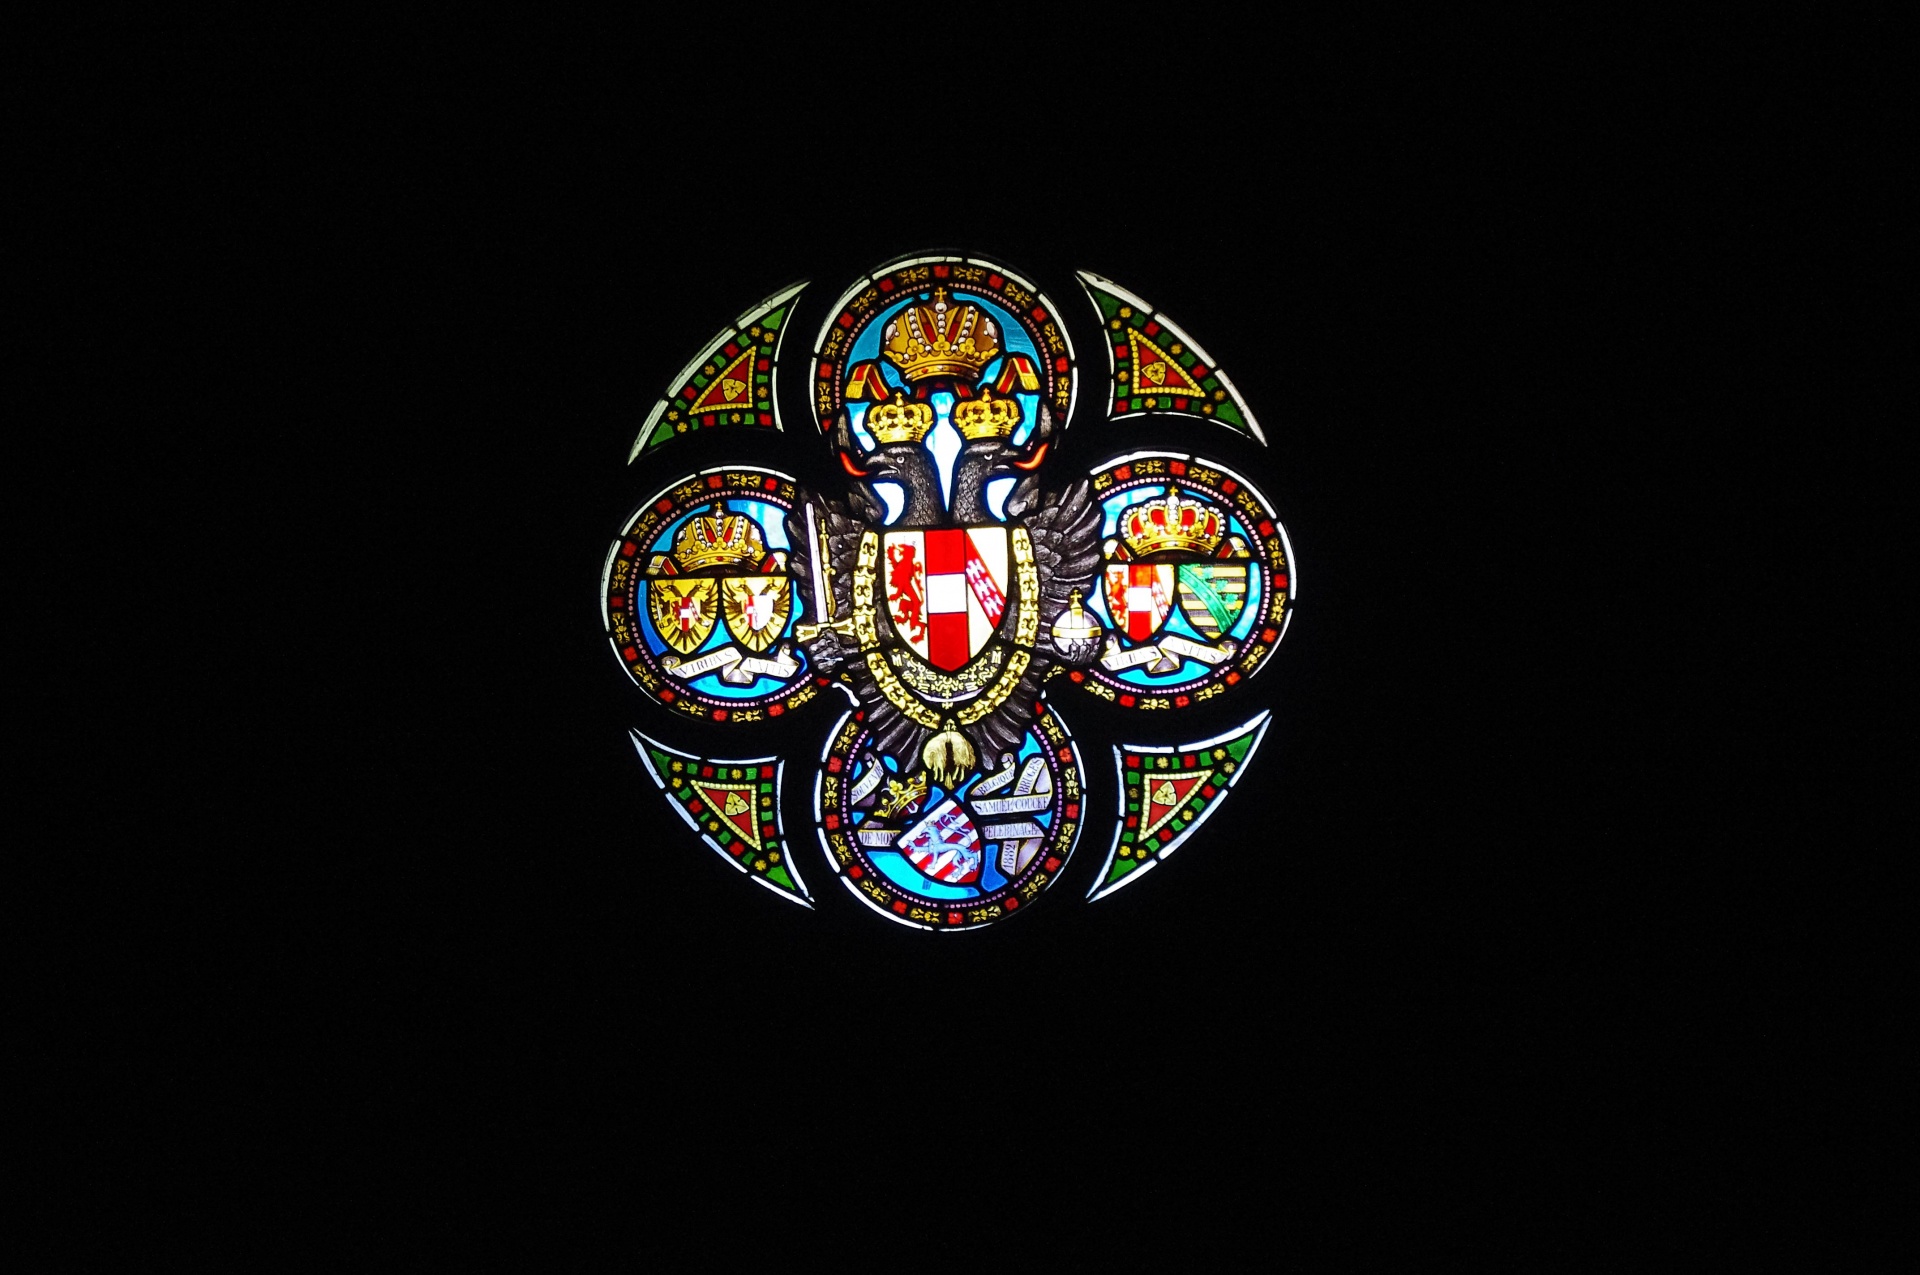 Painted Glass Chapel Window